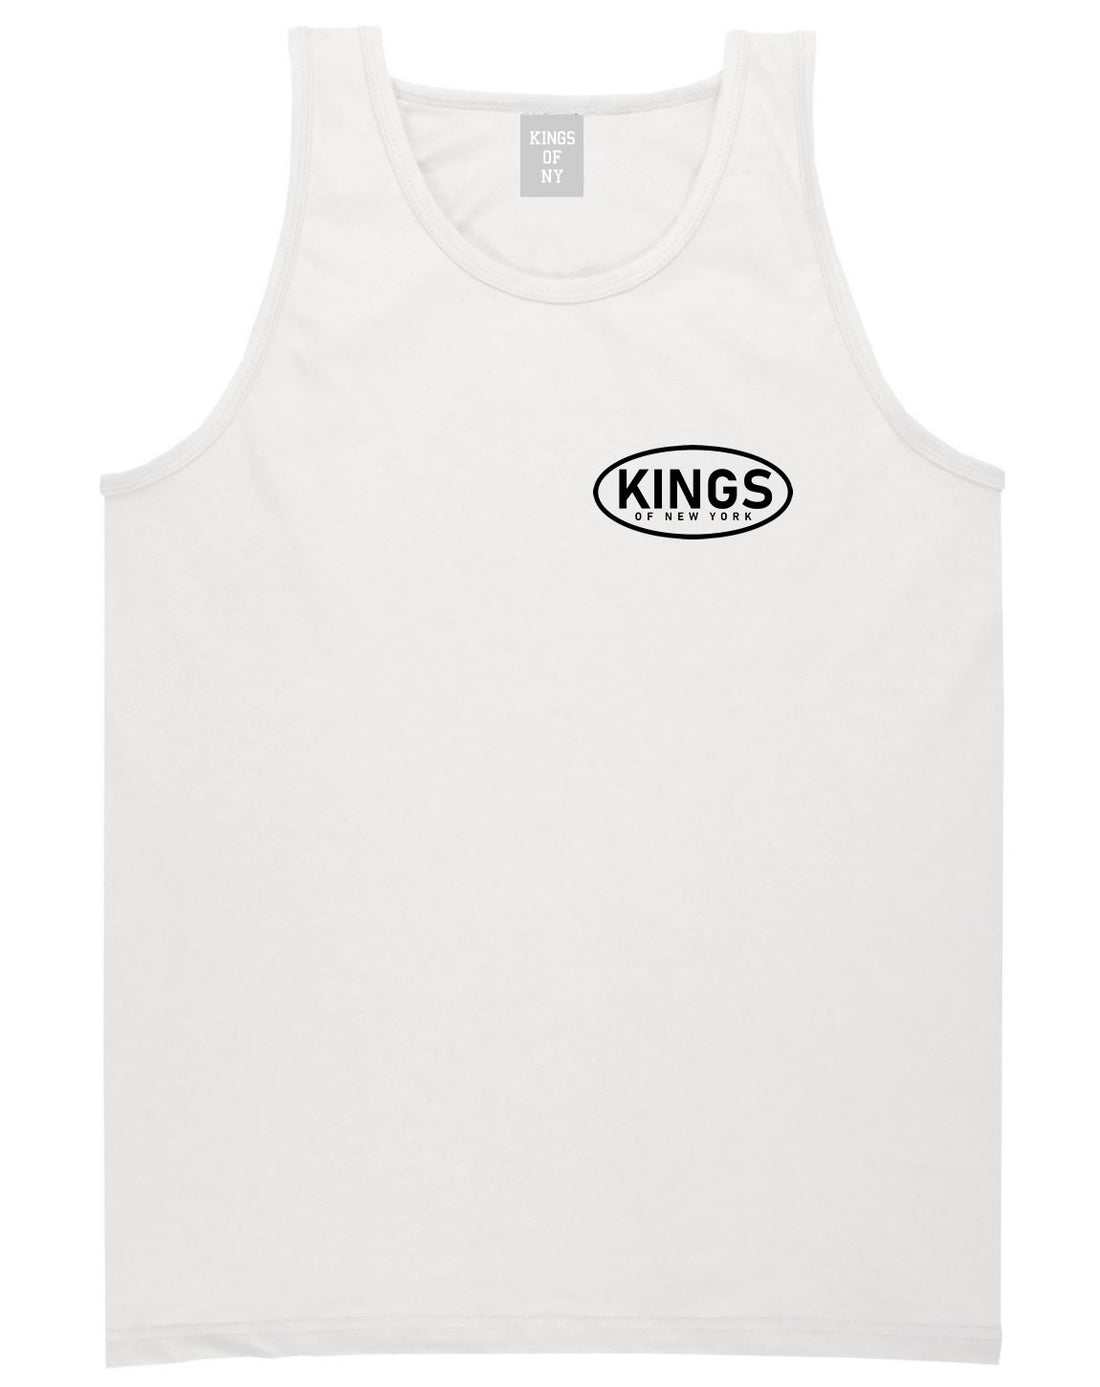 Kings Of New York Work Logo Mens Tank Top Shirt White